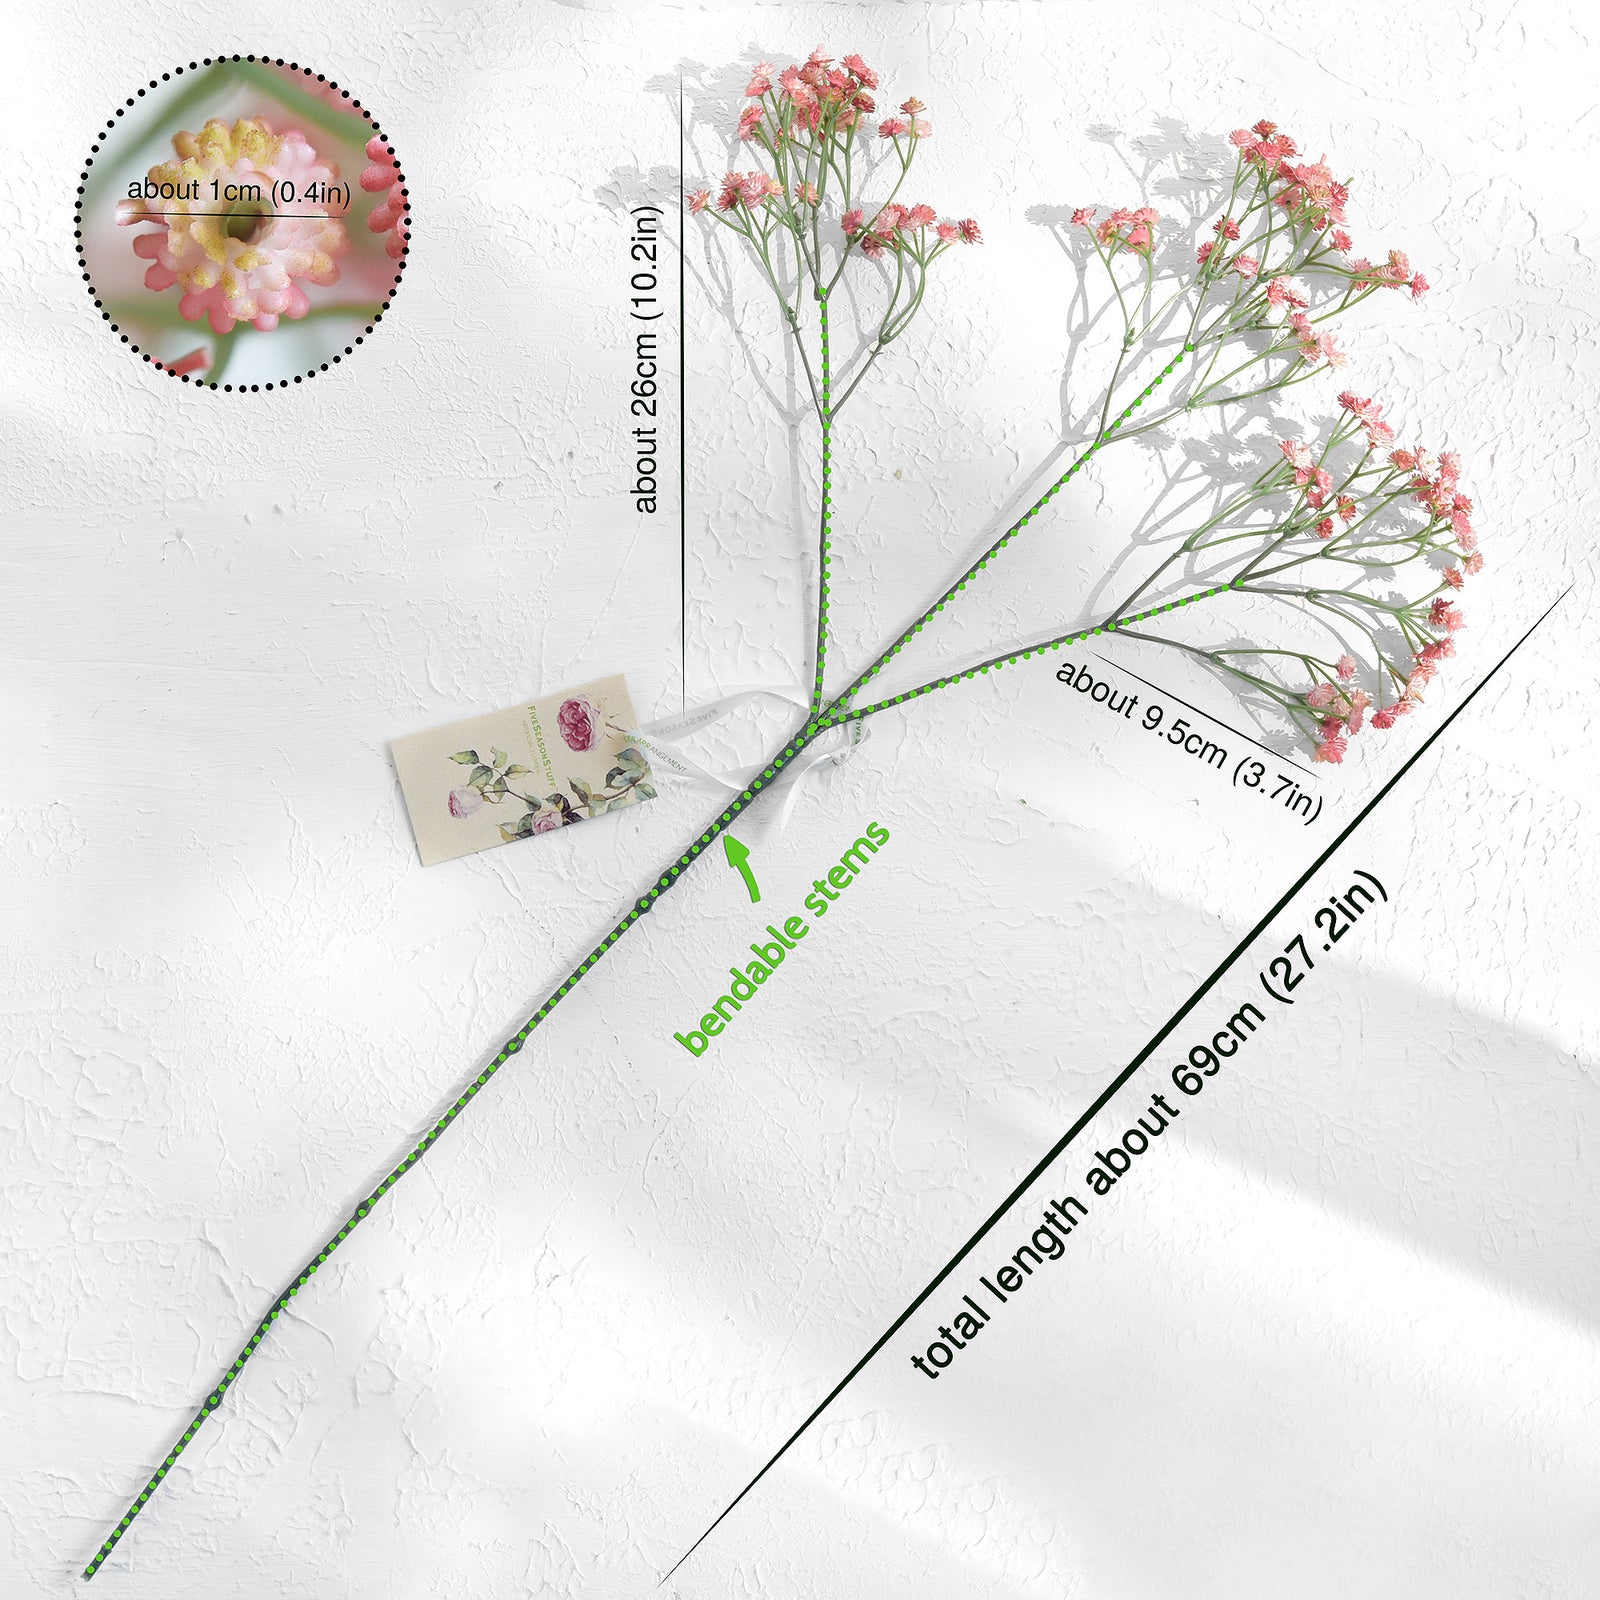 6 Stems 69cm Ruddy Pink Baby’s Breath Artificial Flowers Baby’s Breath Gypsophila Tall Long Stems